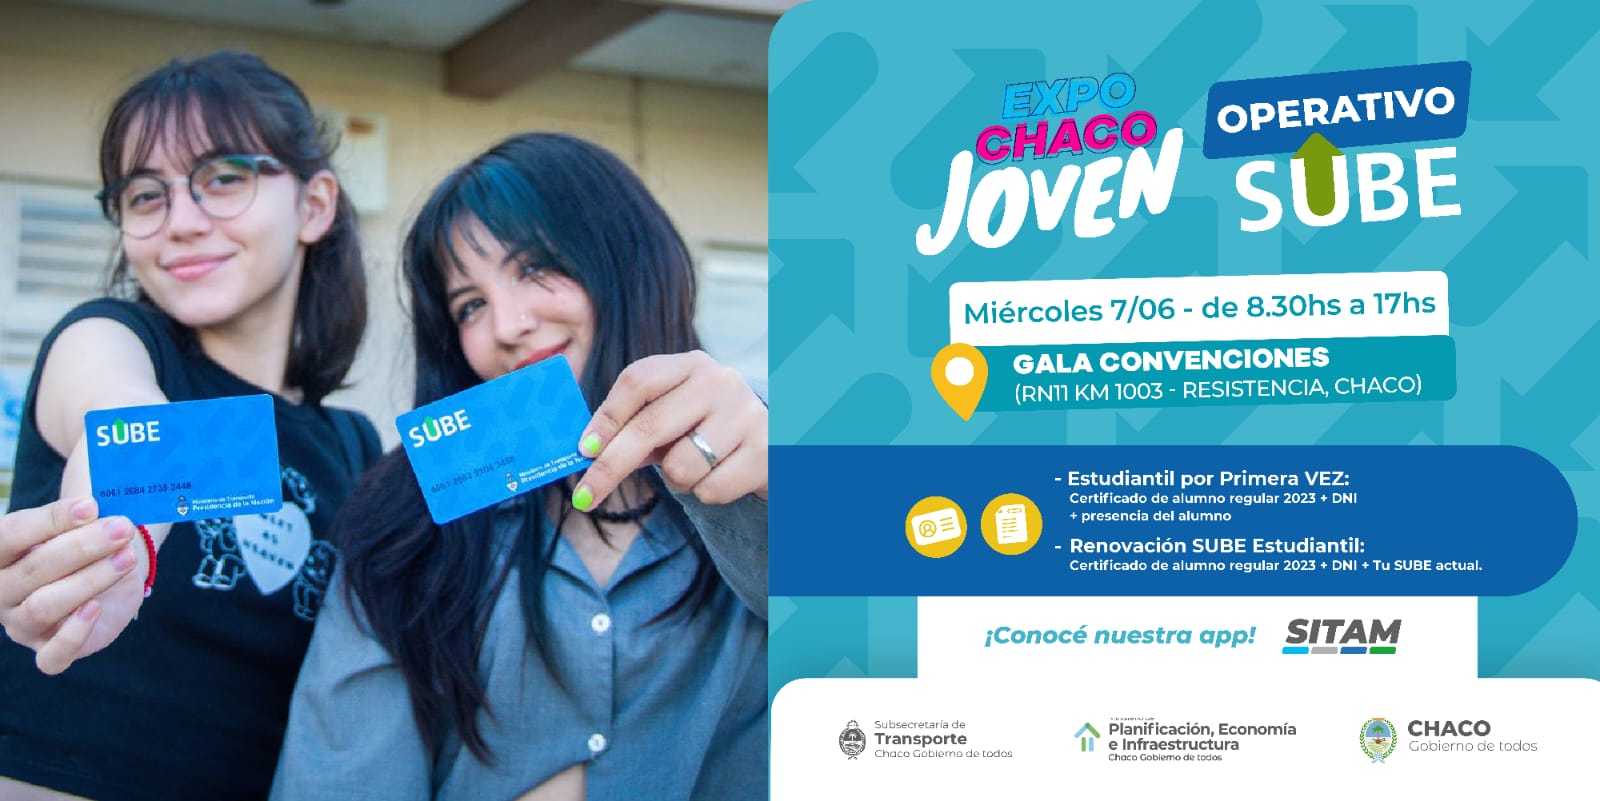 Estudiantes podrán tramitar la Tarjeta SUBE en la “Expo Chaco Joven”